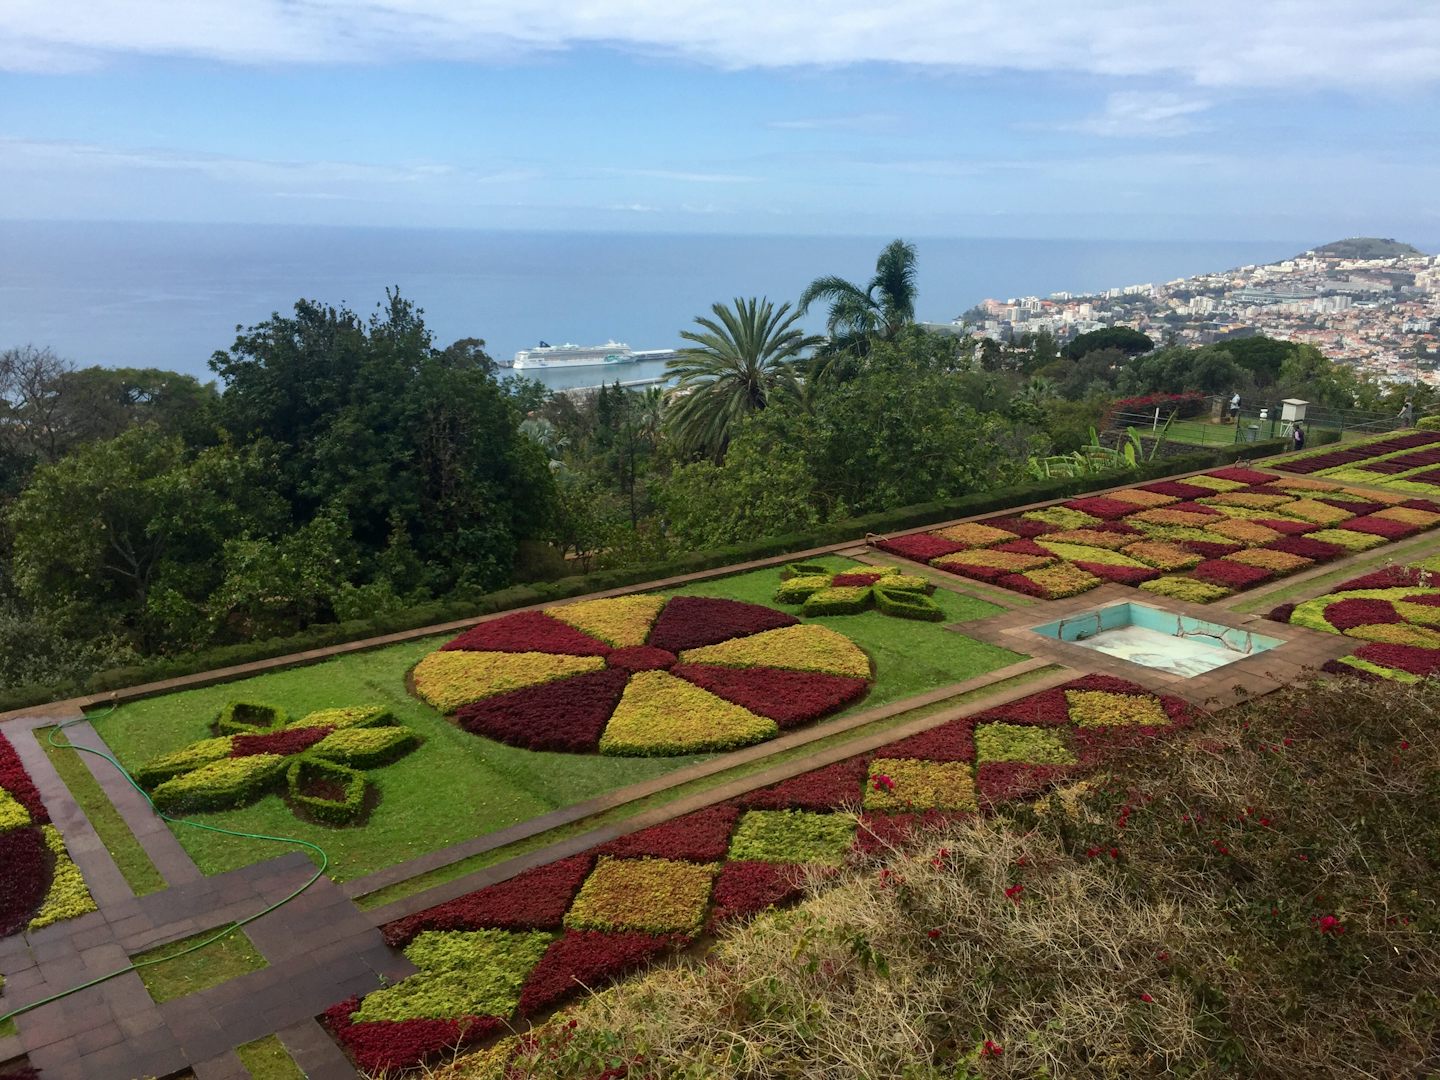 Madeira Botanical Garden is worht the visit